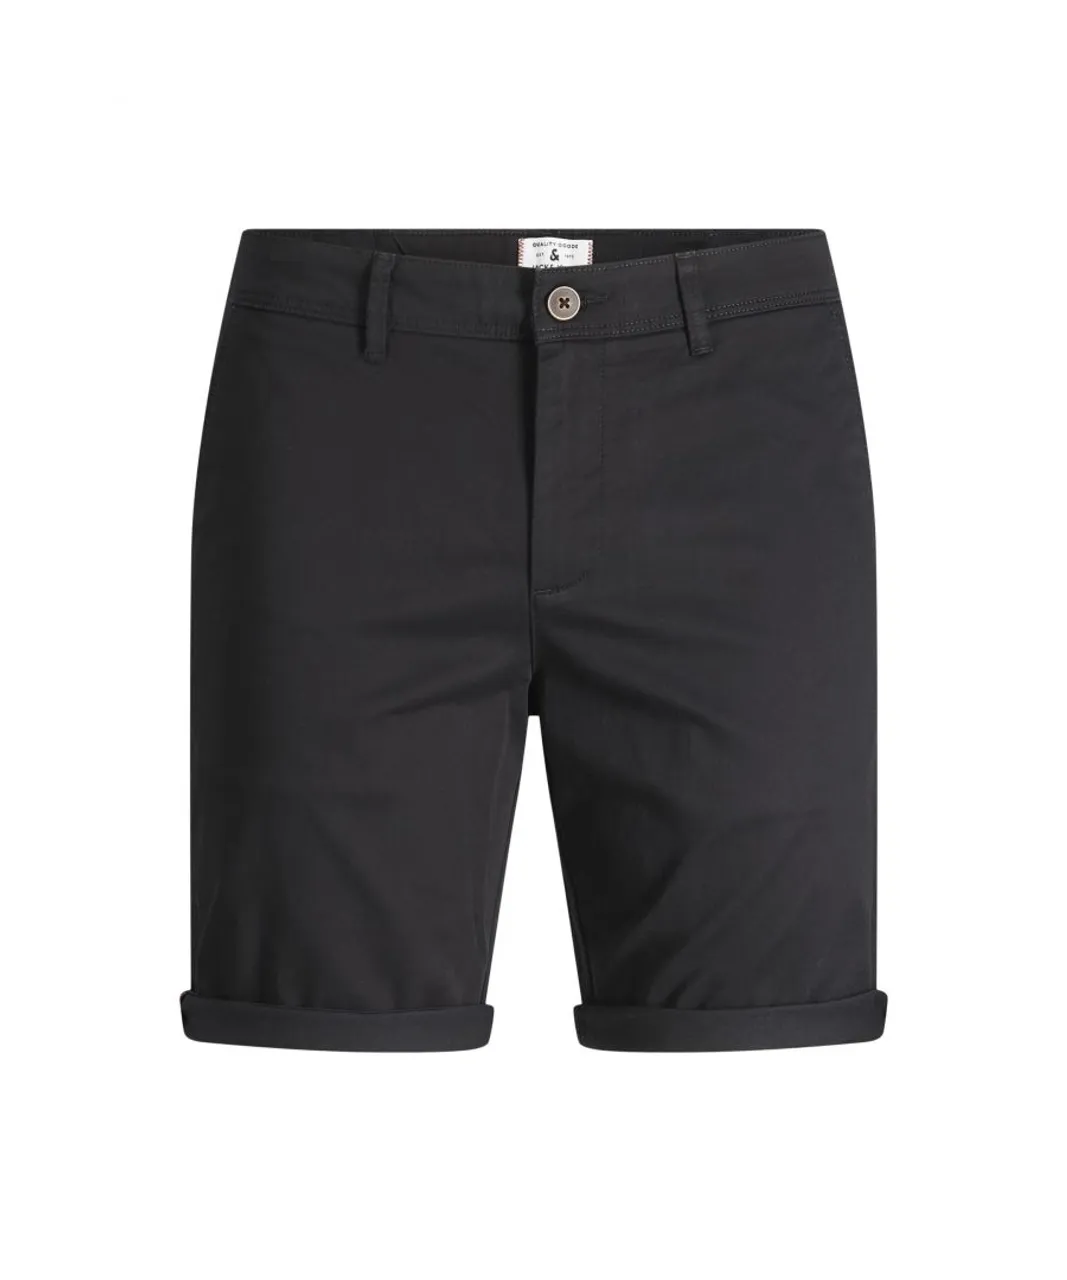 Jack & Jones Mens shorts - Black Cotton